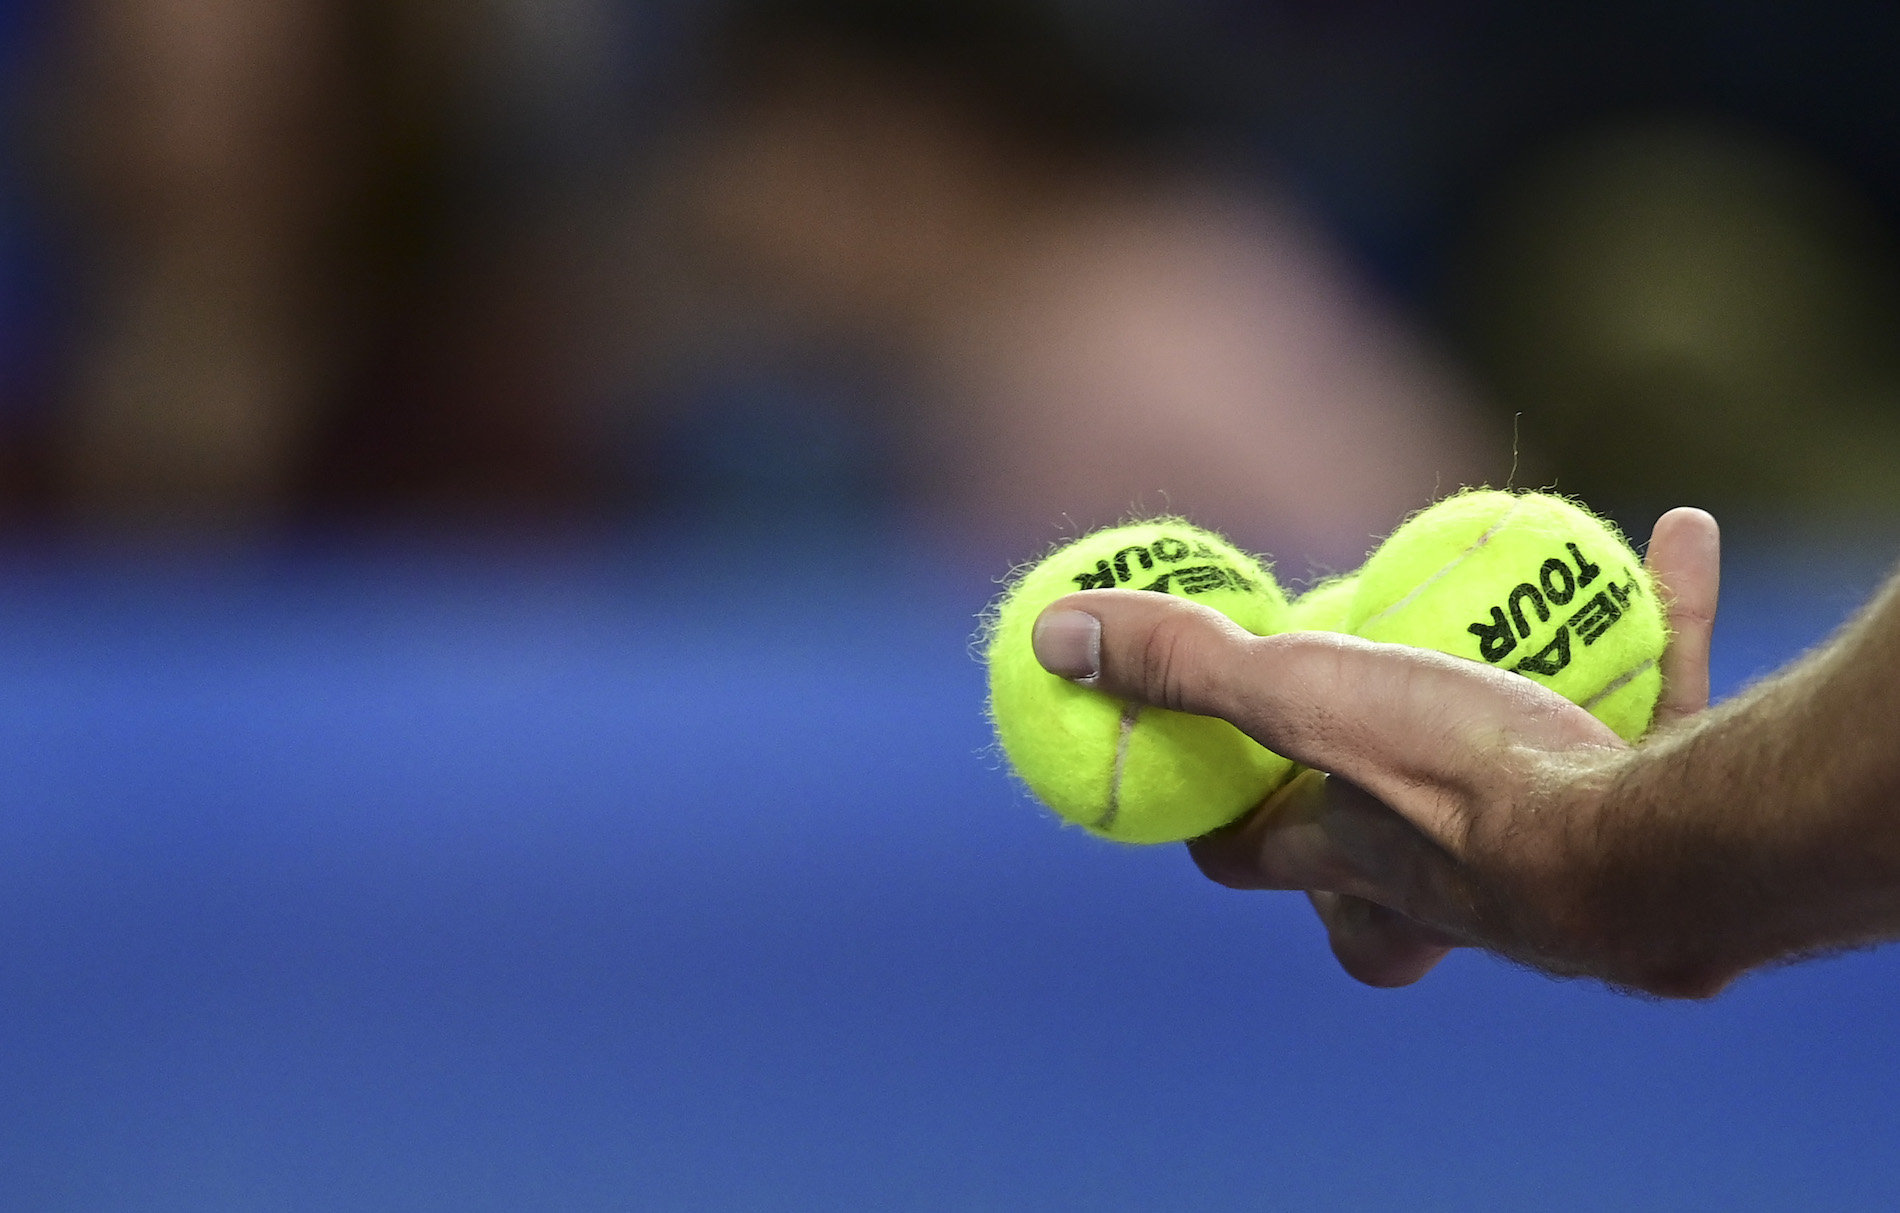 When will the tennis season restart? Andrea Gaudenzi answers.